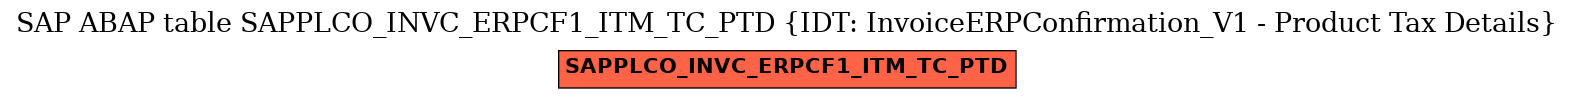 E-R Diagram for table SAPPLCO_INVC_ERPCF1_ITM_TC_PTD (IDT: InvoiceERPConfirmation_V1 - Product Tax Details)